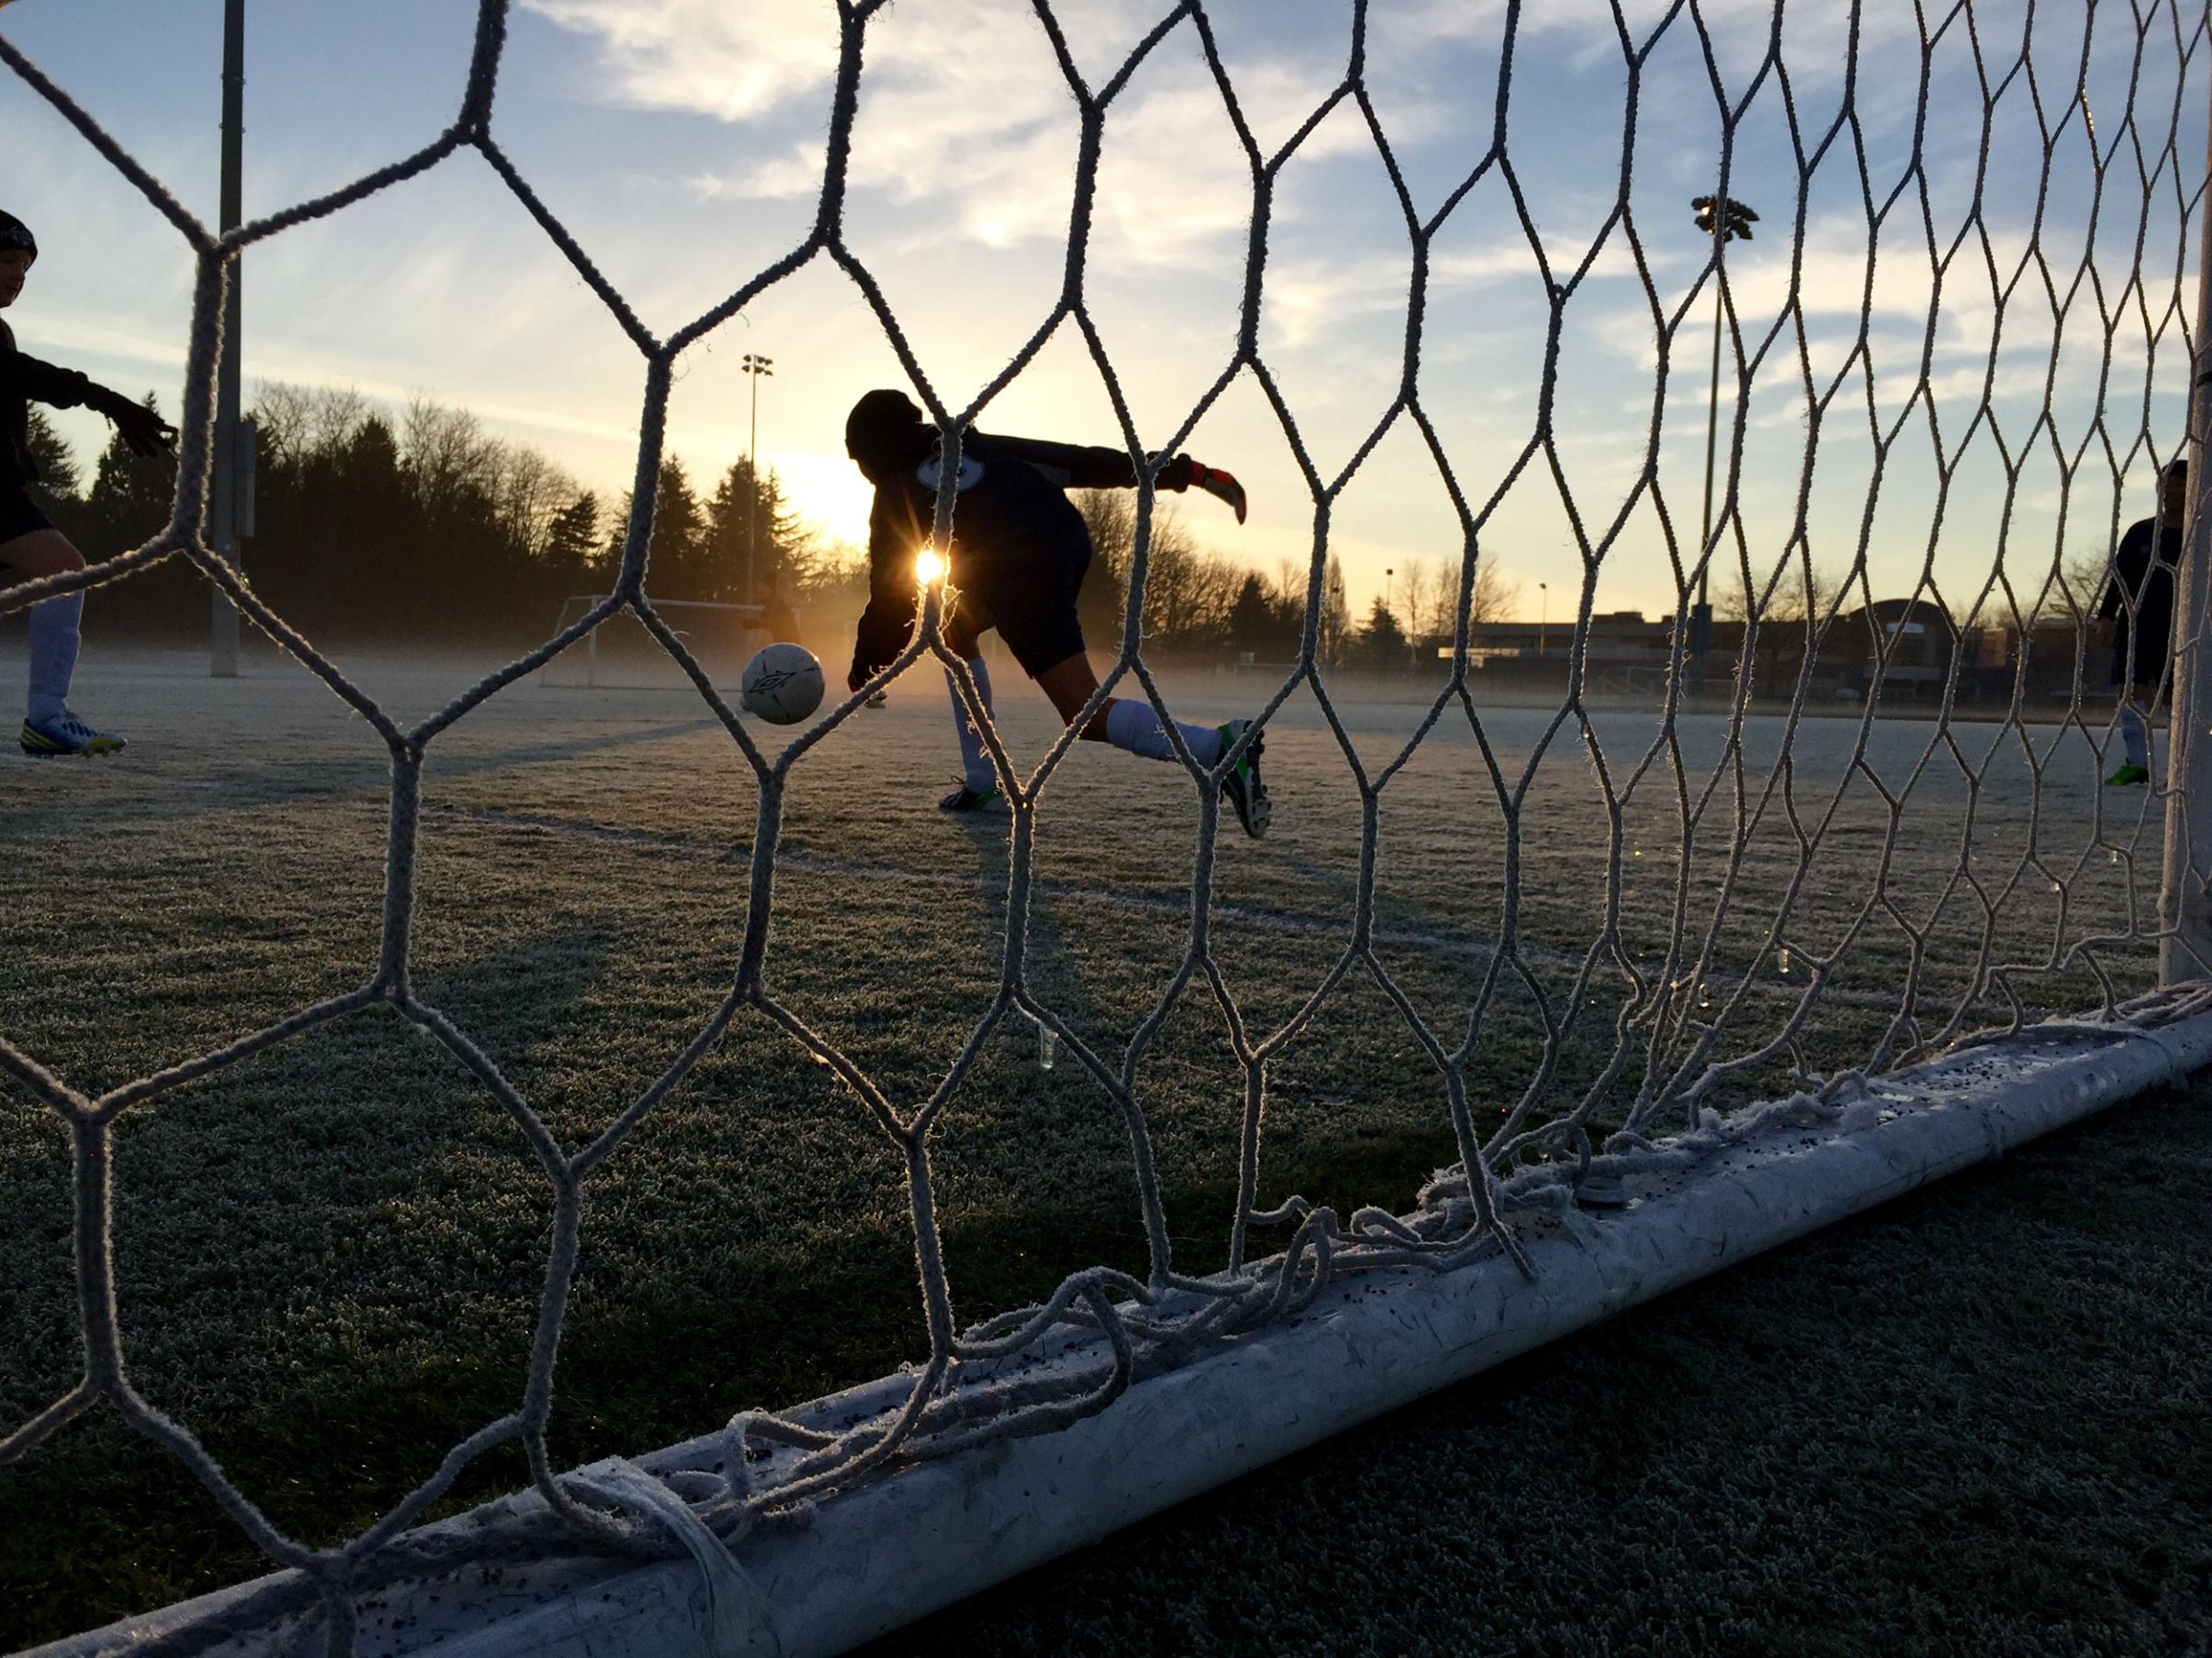 Hugh Boyd Soccer Field in Richmond, British Columbia (No additional info provided)